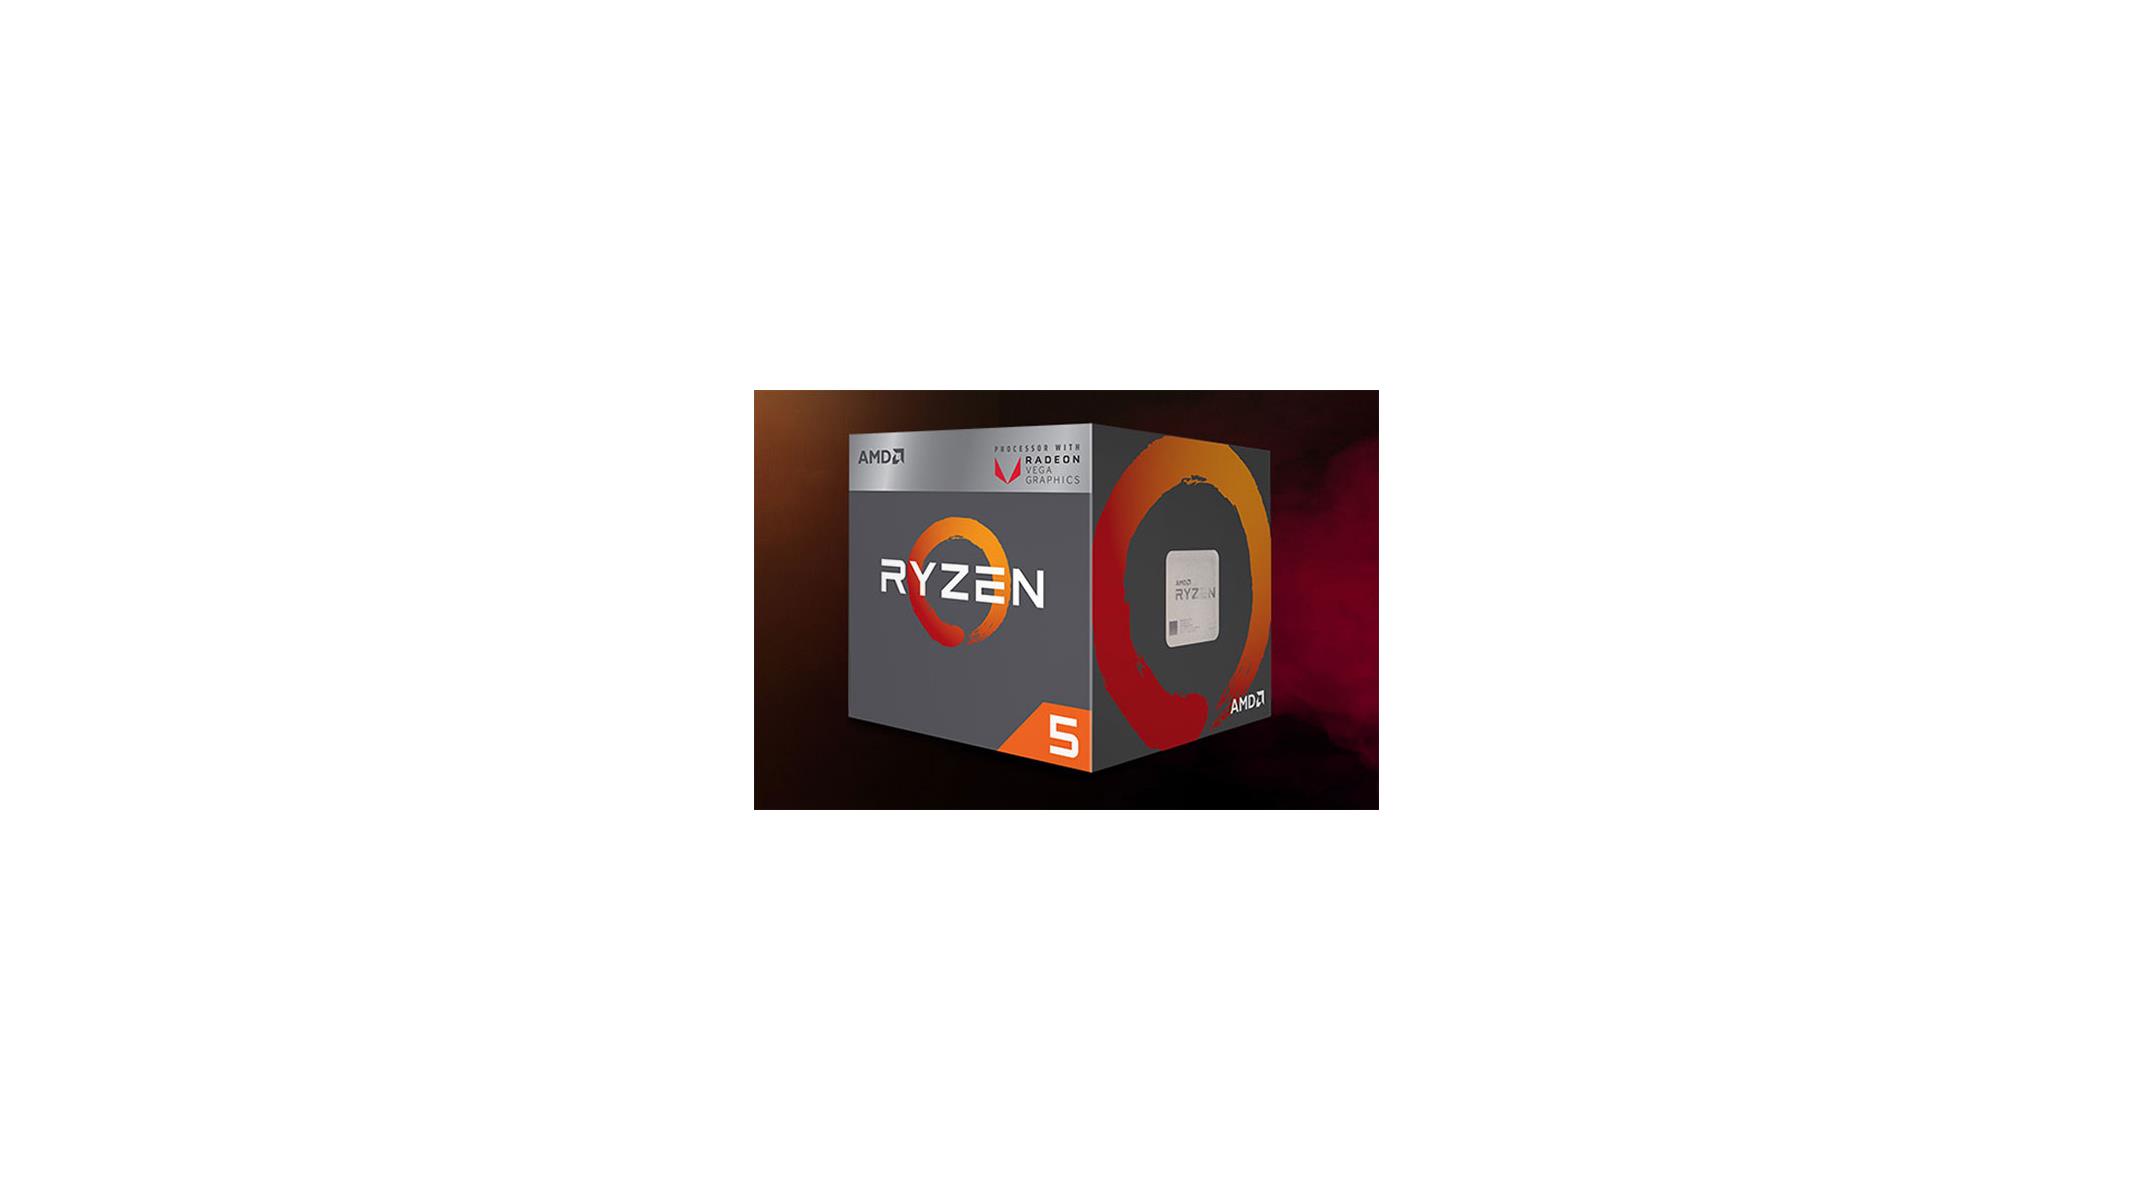 Alleged AMD Ryzen 5 2400G Raven Ridge Desktop CPU With Vega GPU